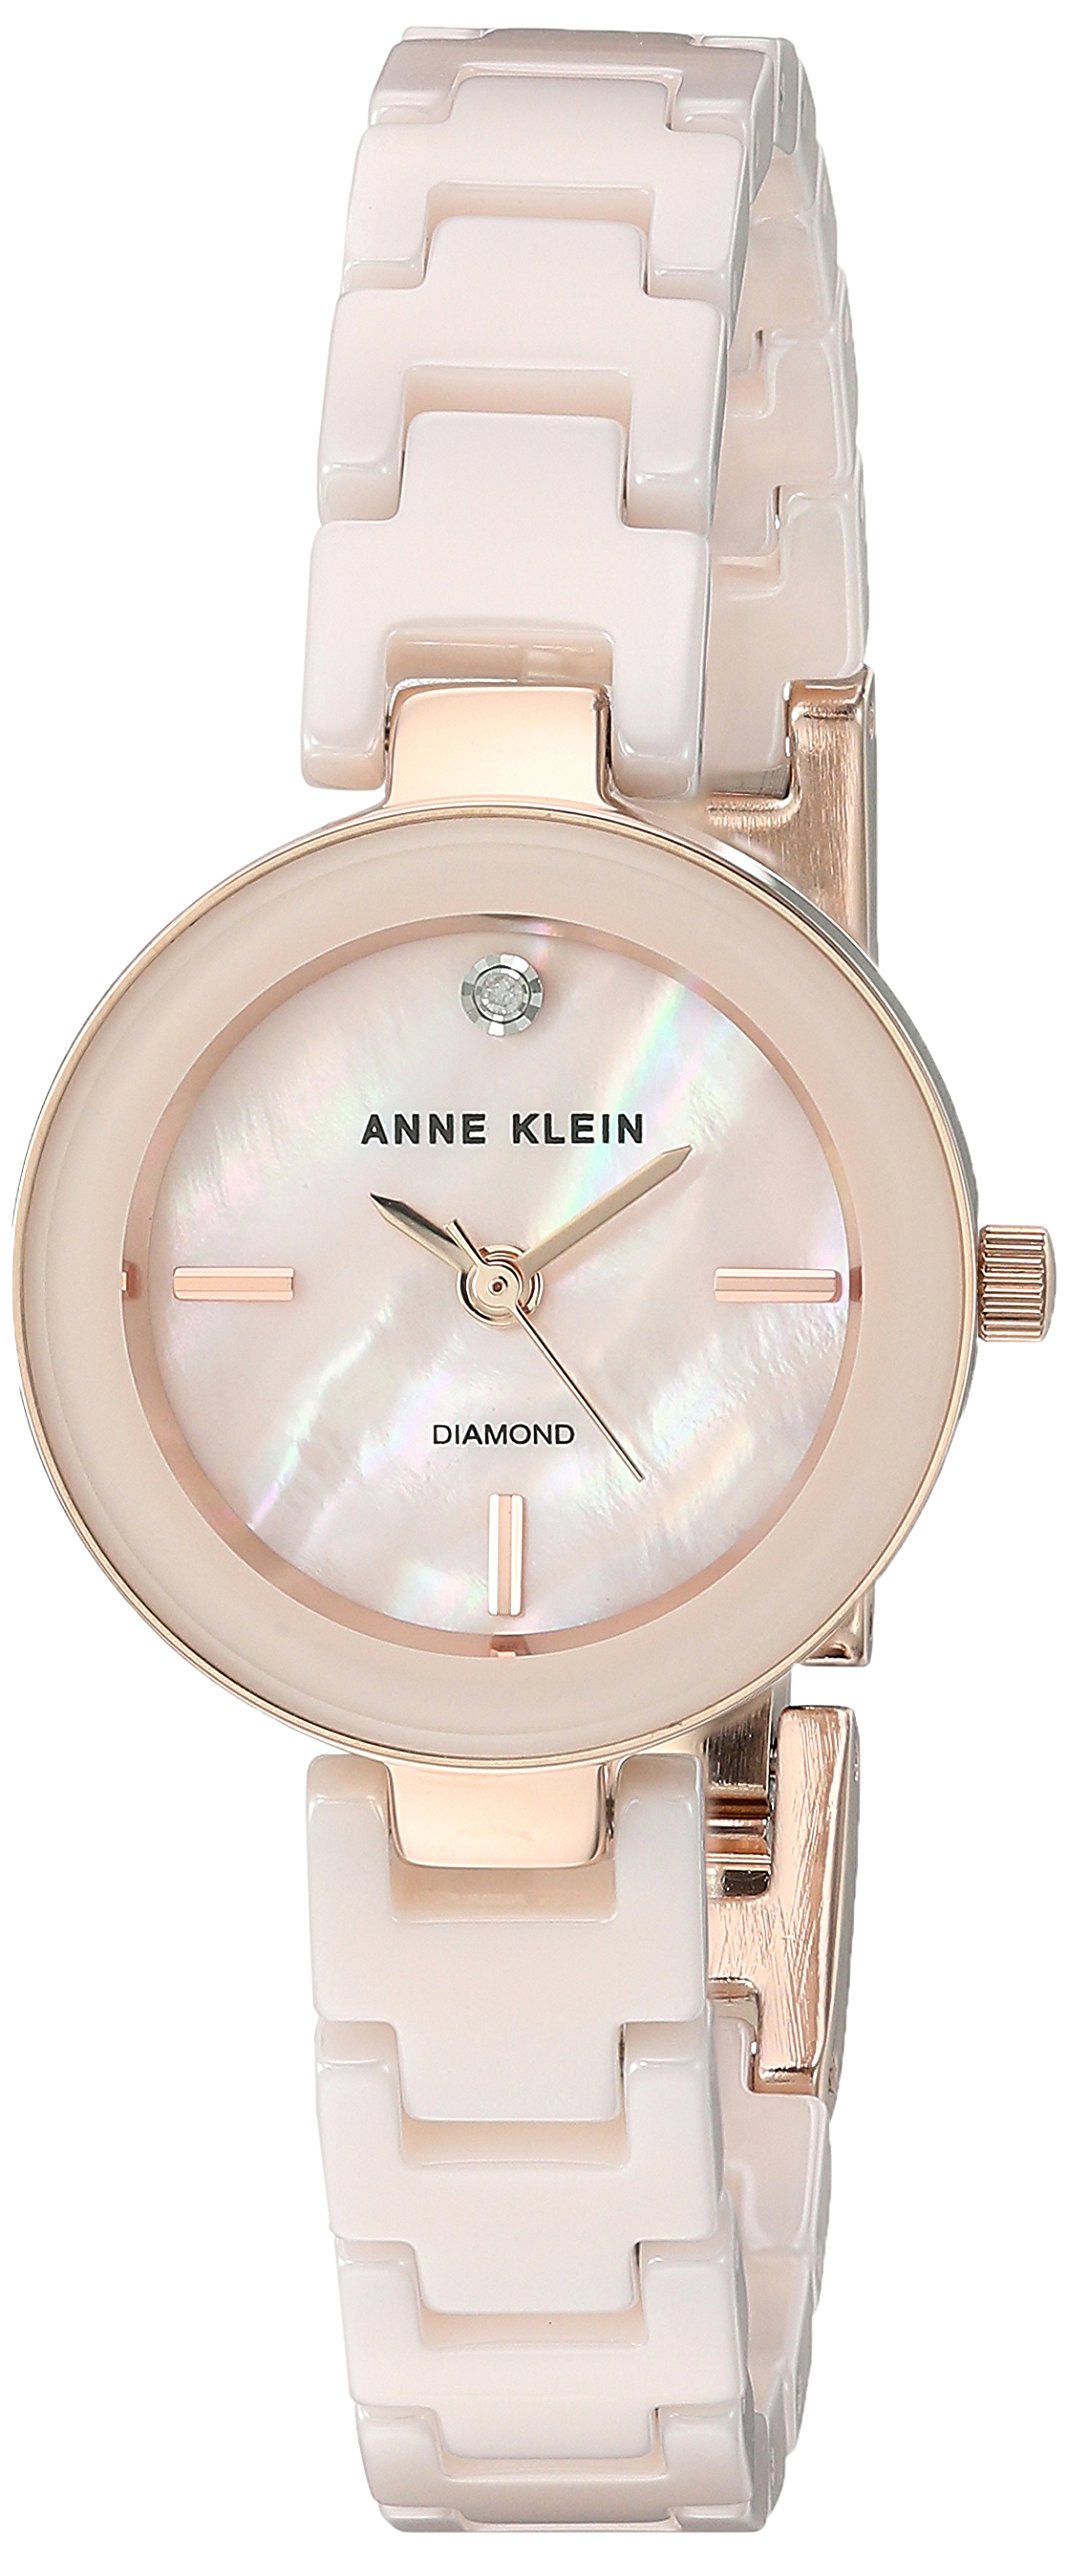 Anne Klein Women's Diamond Japanese-Quartz Dress Watch with Ceramic Strap, Pink, 10 (Model: AK/2660LPRG)